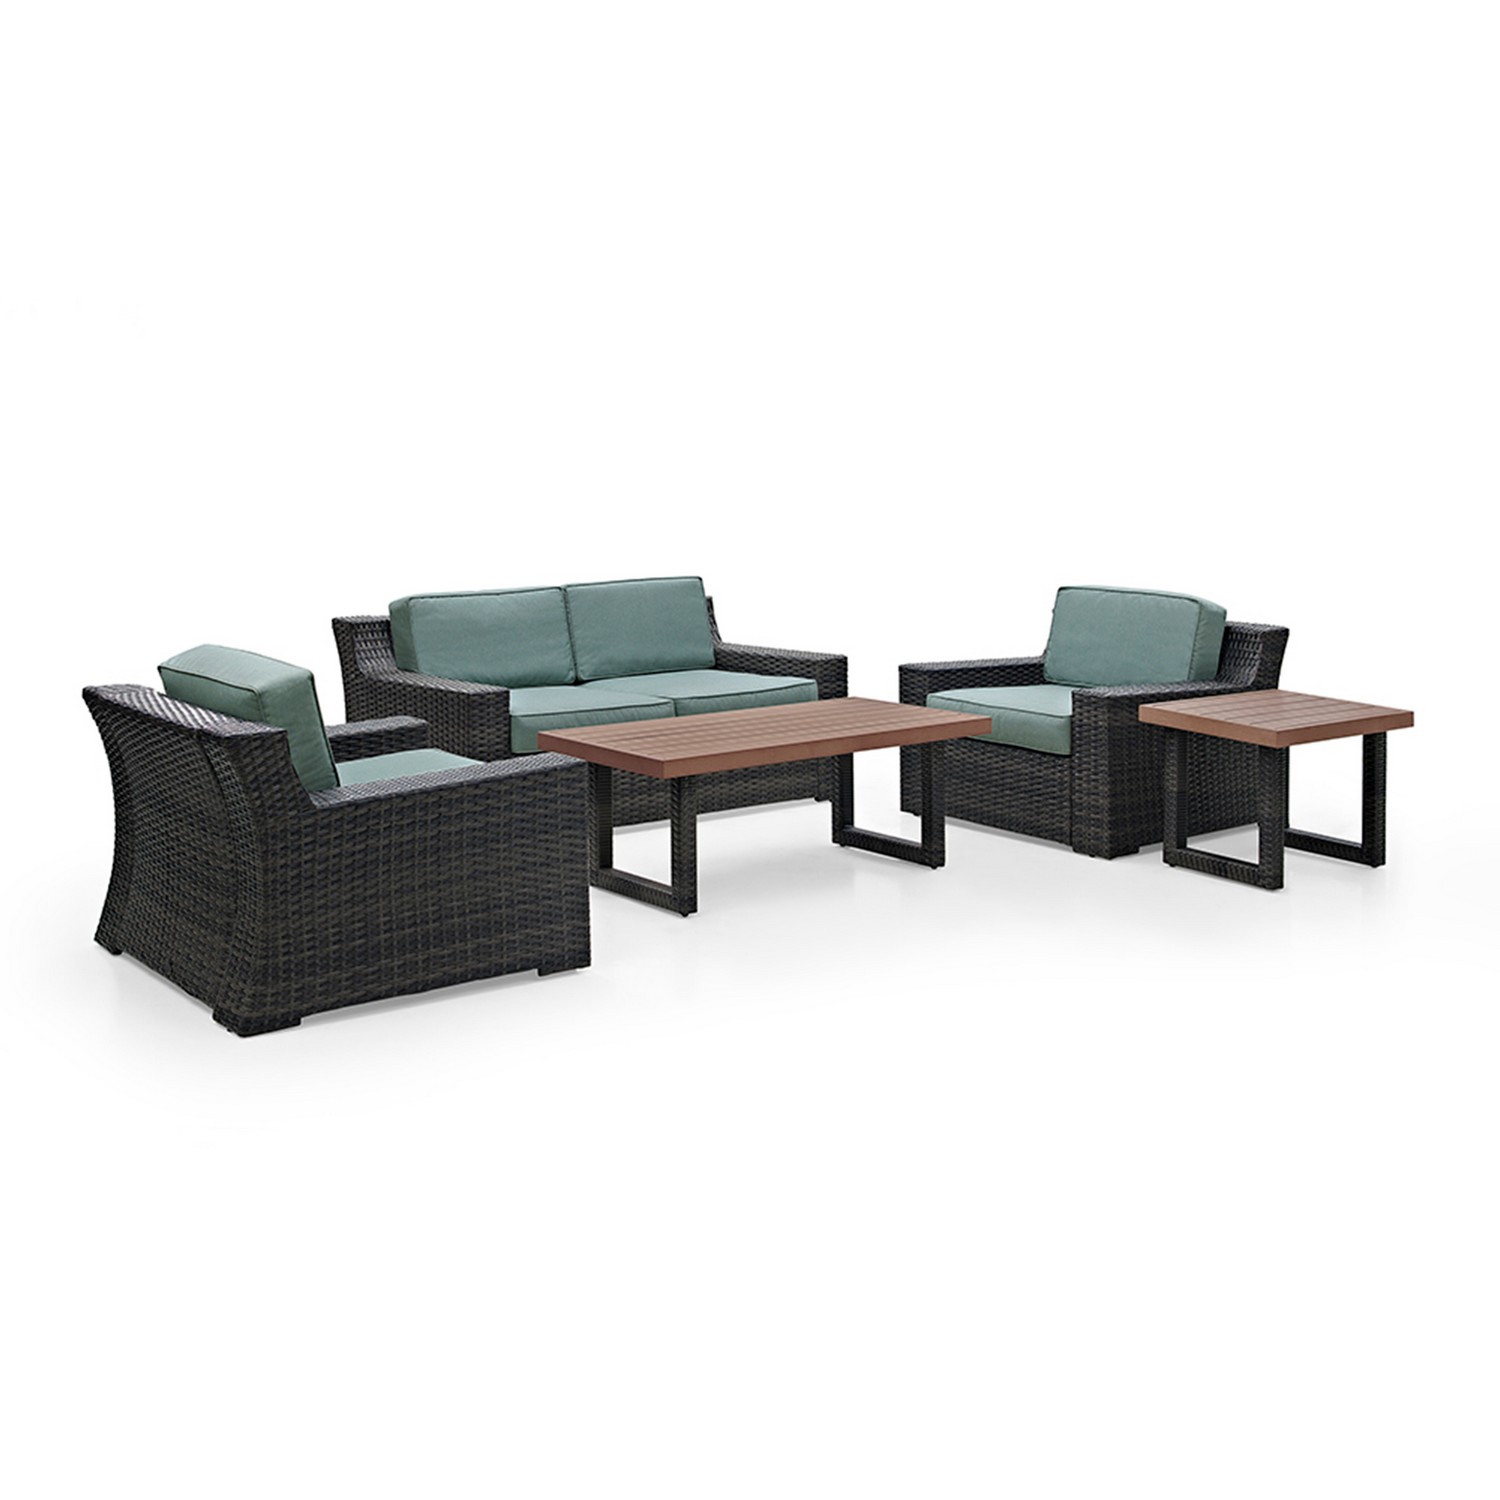 Crosley Beaufort 5-PC Outdoor Wicker Conversation Set - Loveseat, 2 Chairs, Coffee Table, Side Table - Mist/Brown